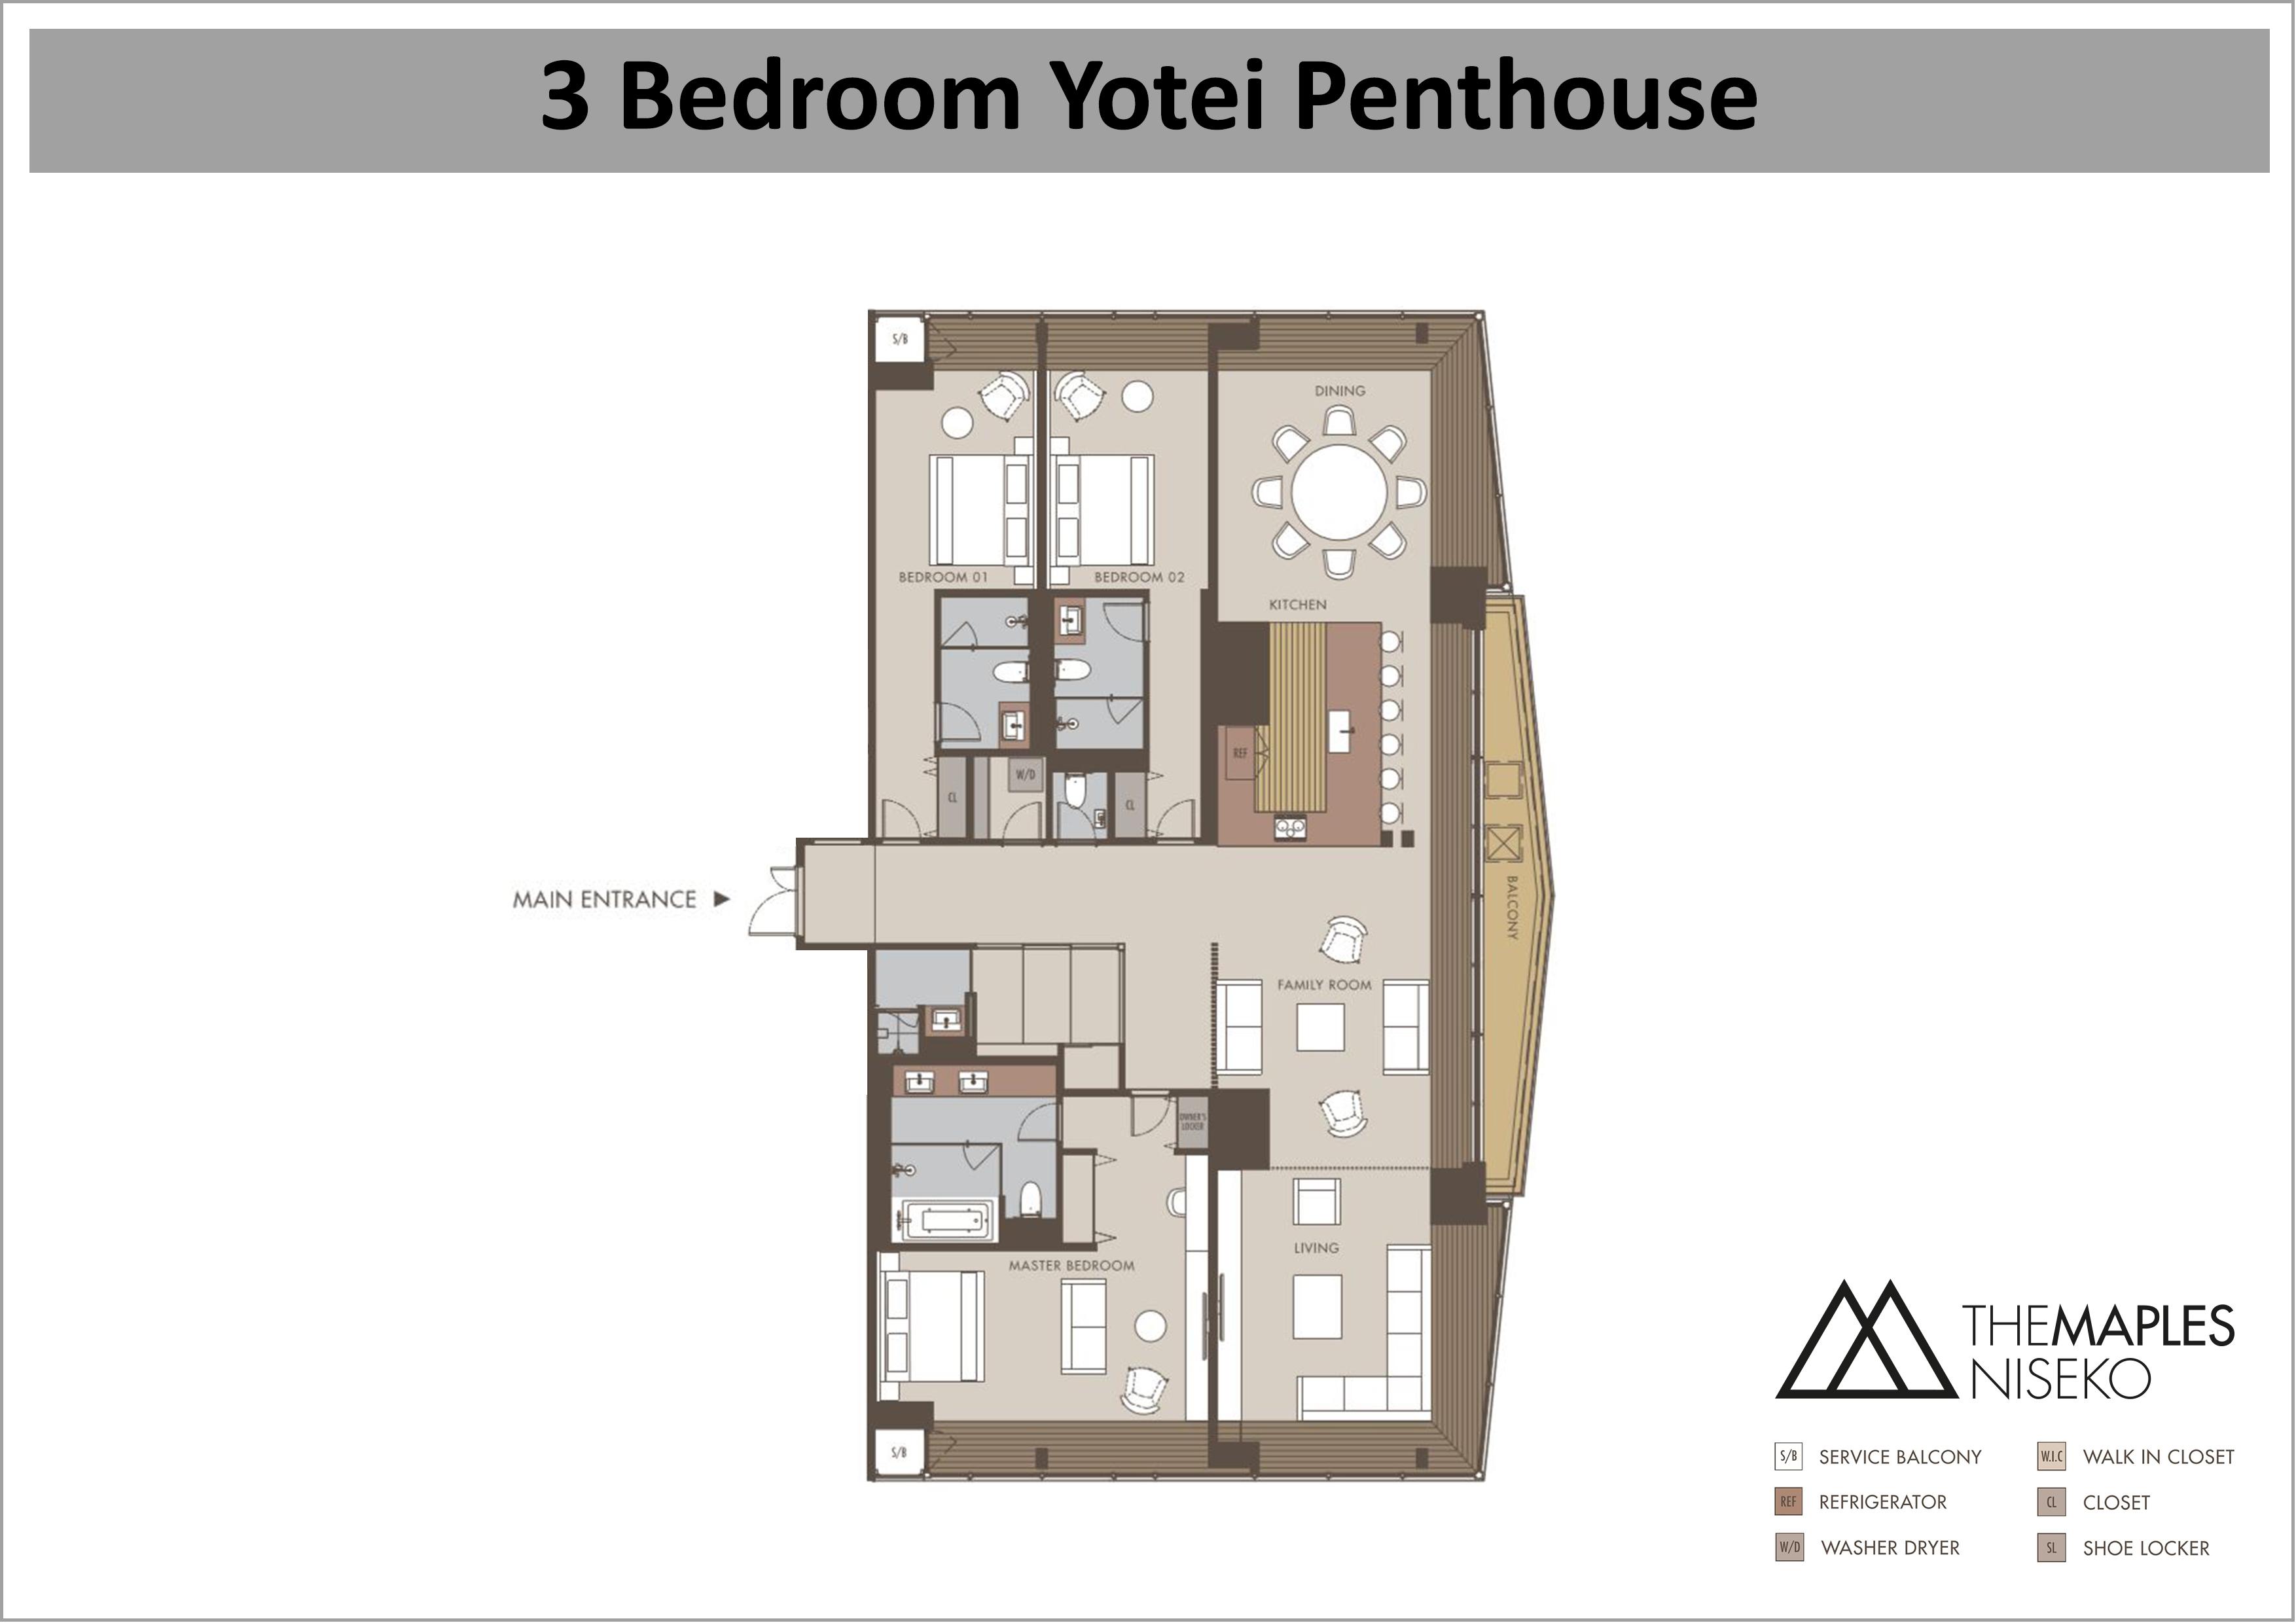 The Maples - 3 Bedroom Yotei Penthouse floor plan